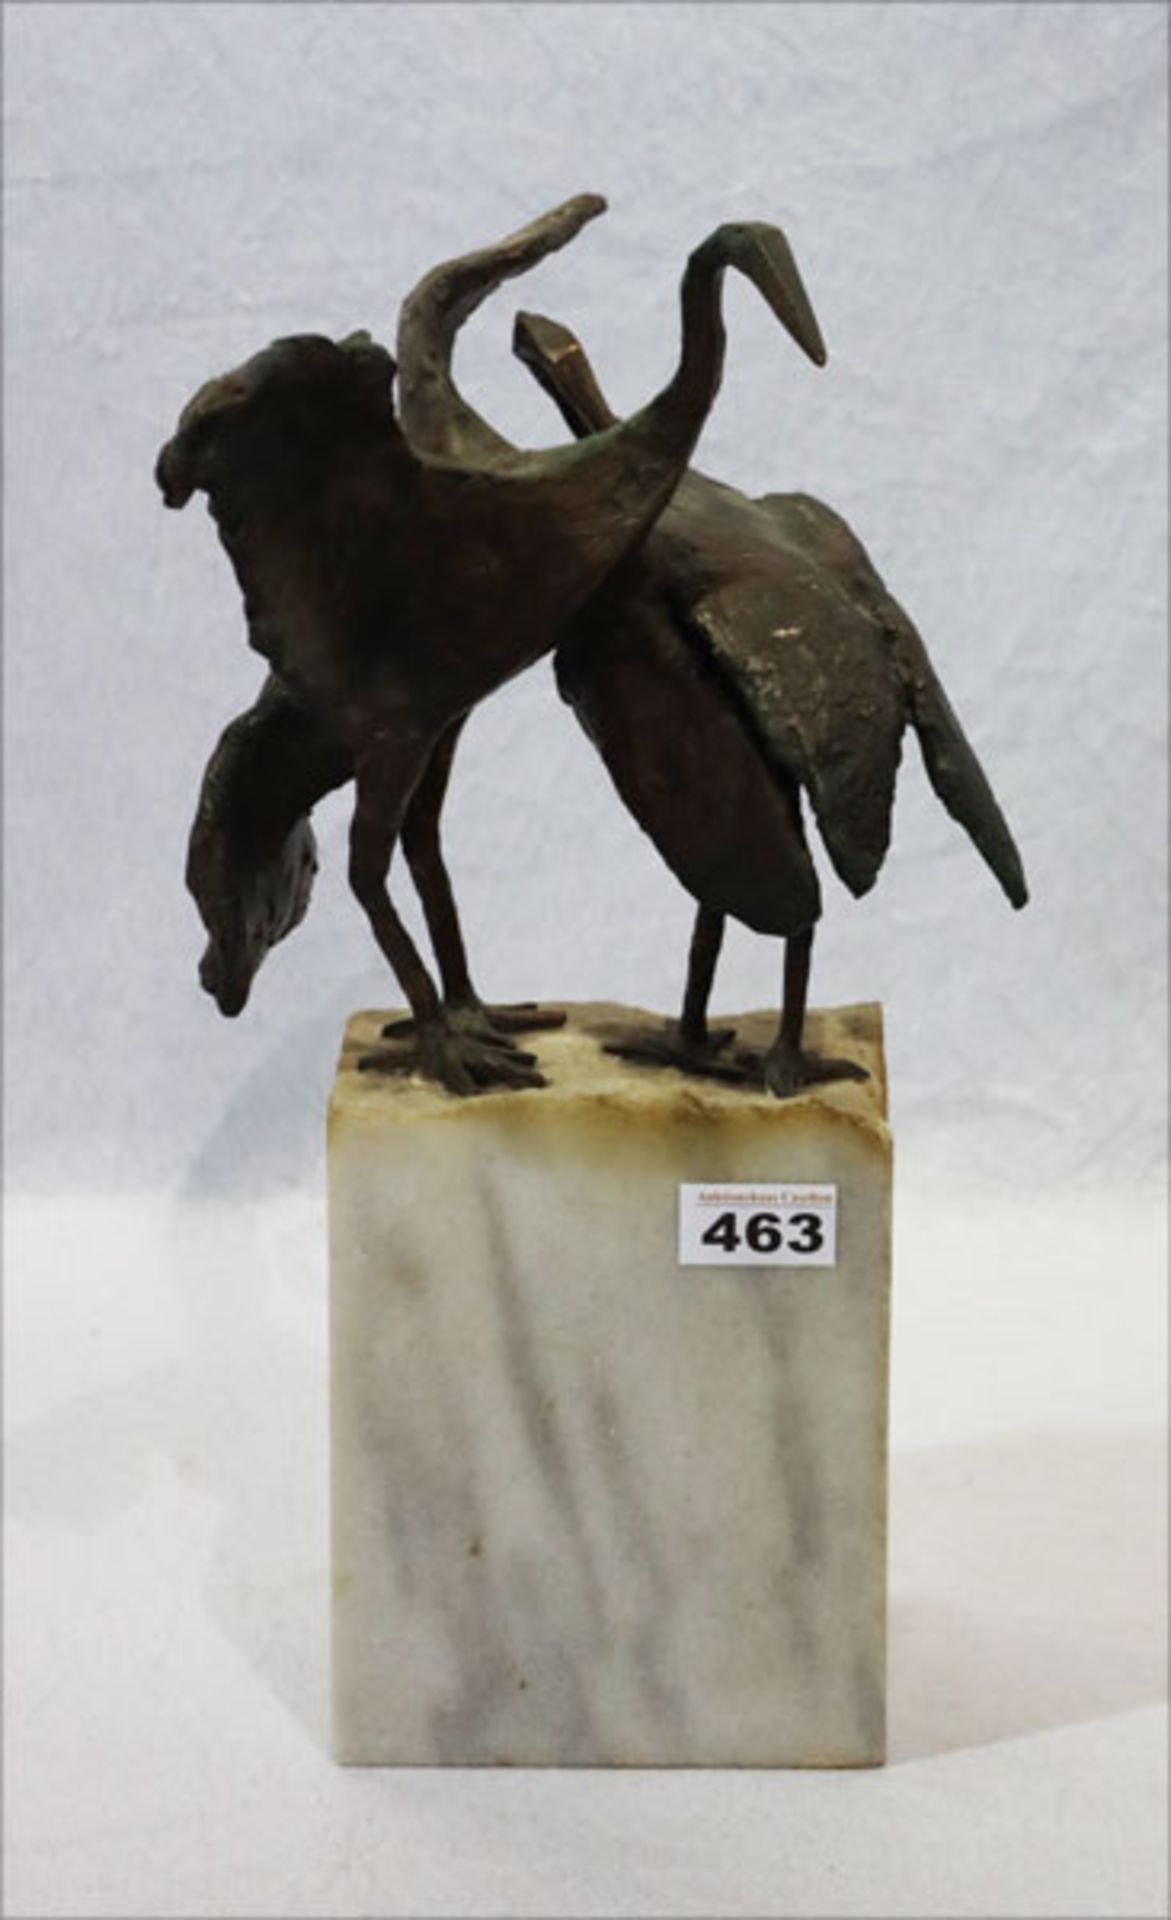 Bronze Tierskulptur 'Vögel', dunkel patiniert, auf Marmorsockel, attr. Kurt Speckbacher ?, H 40 cm